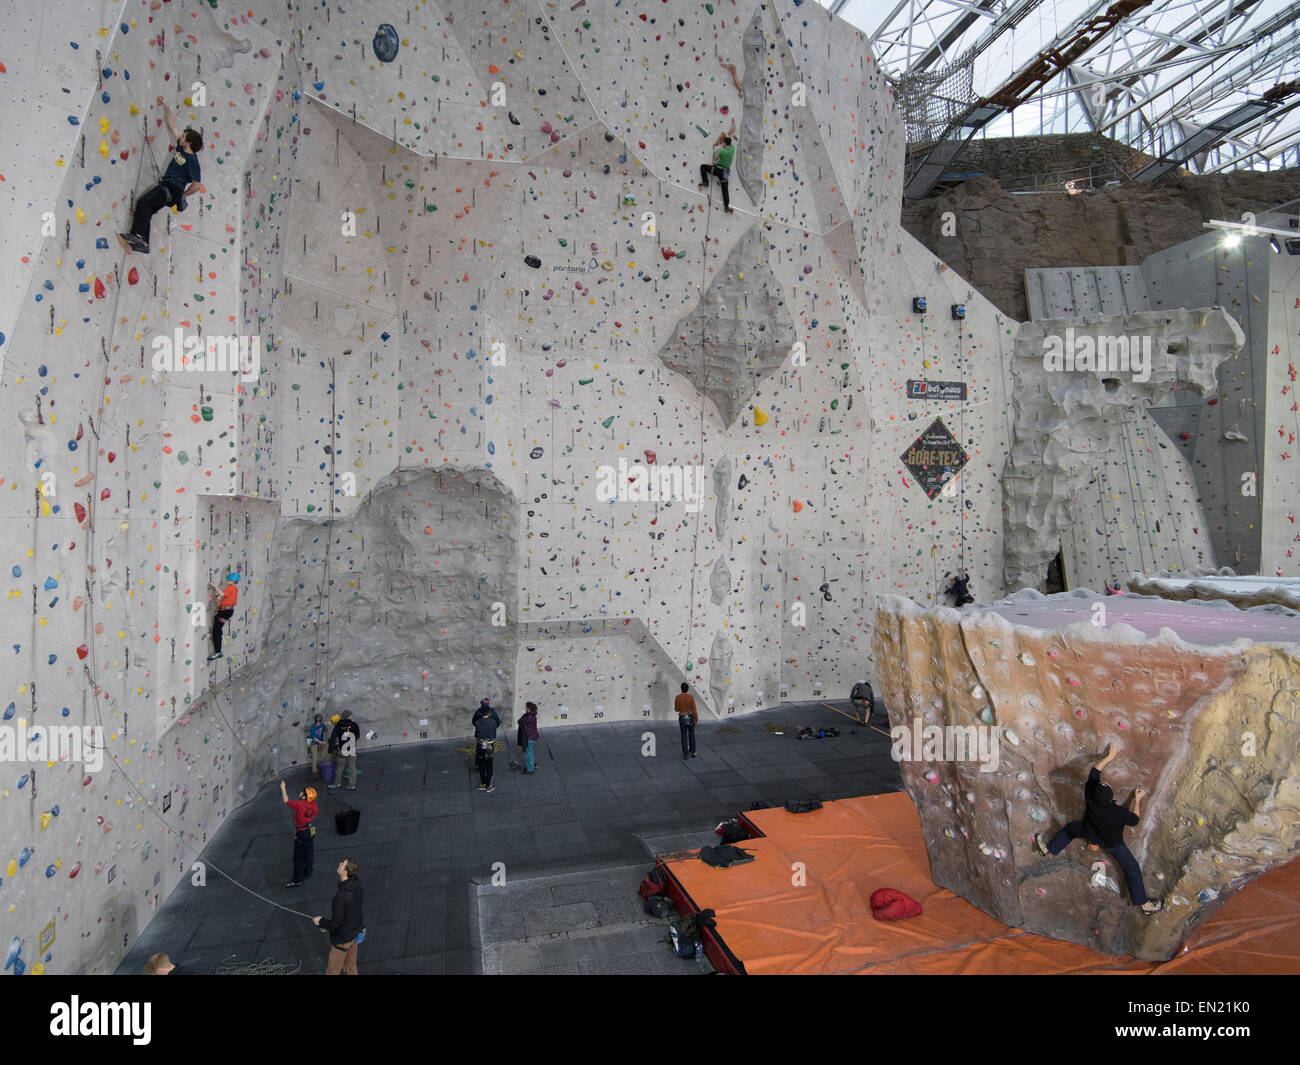 Edinburgh International Climbing Arena - World's largest indoor climbing area. Ratho, nr Edinburgh, Scotland. Stock Photo